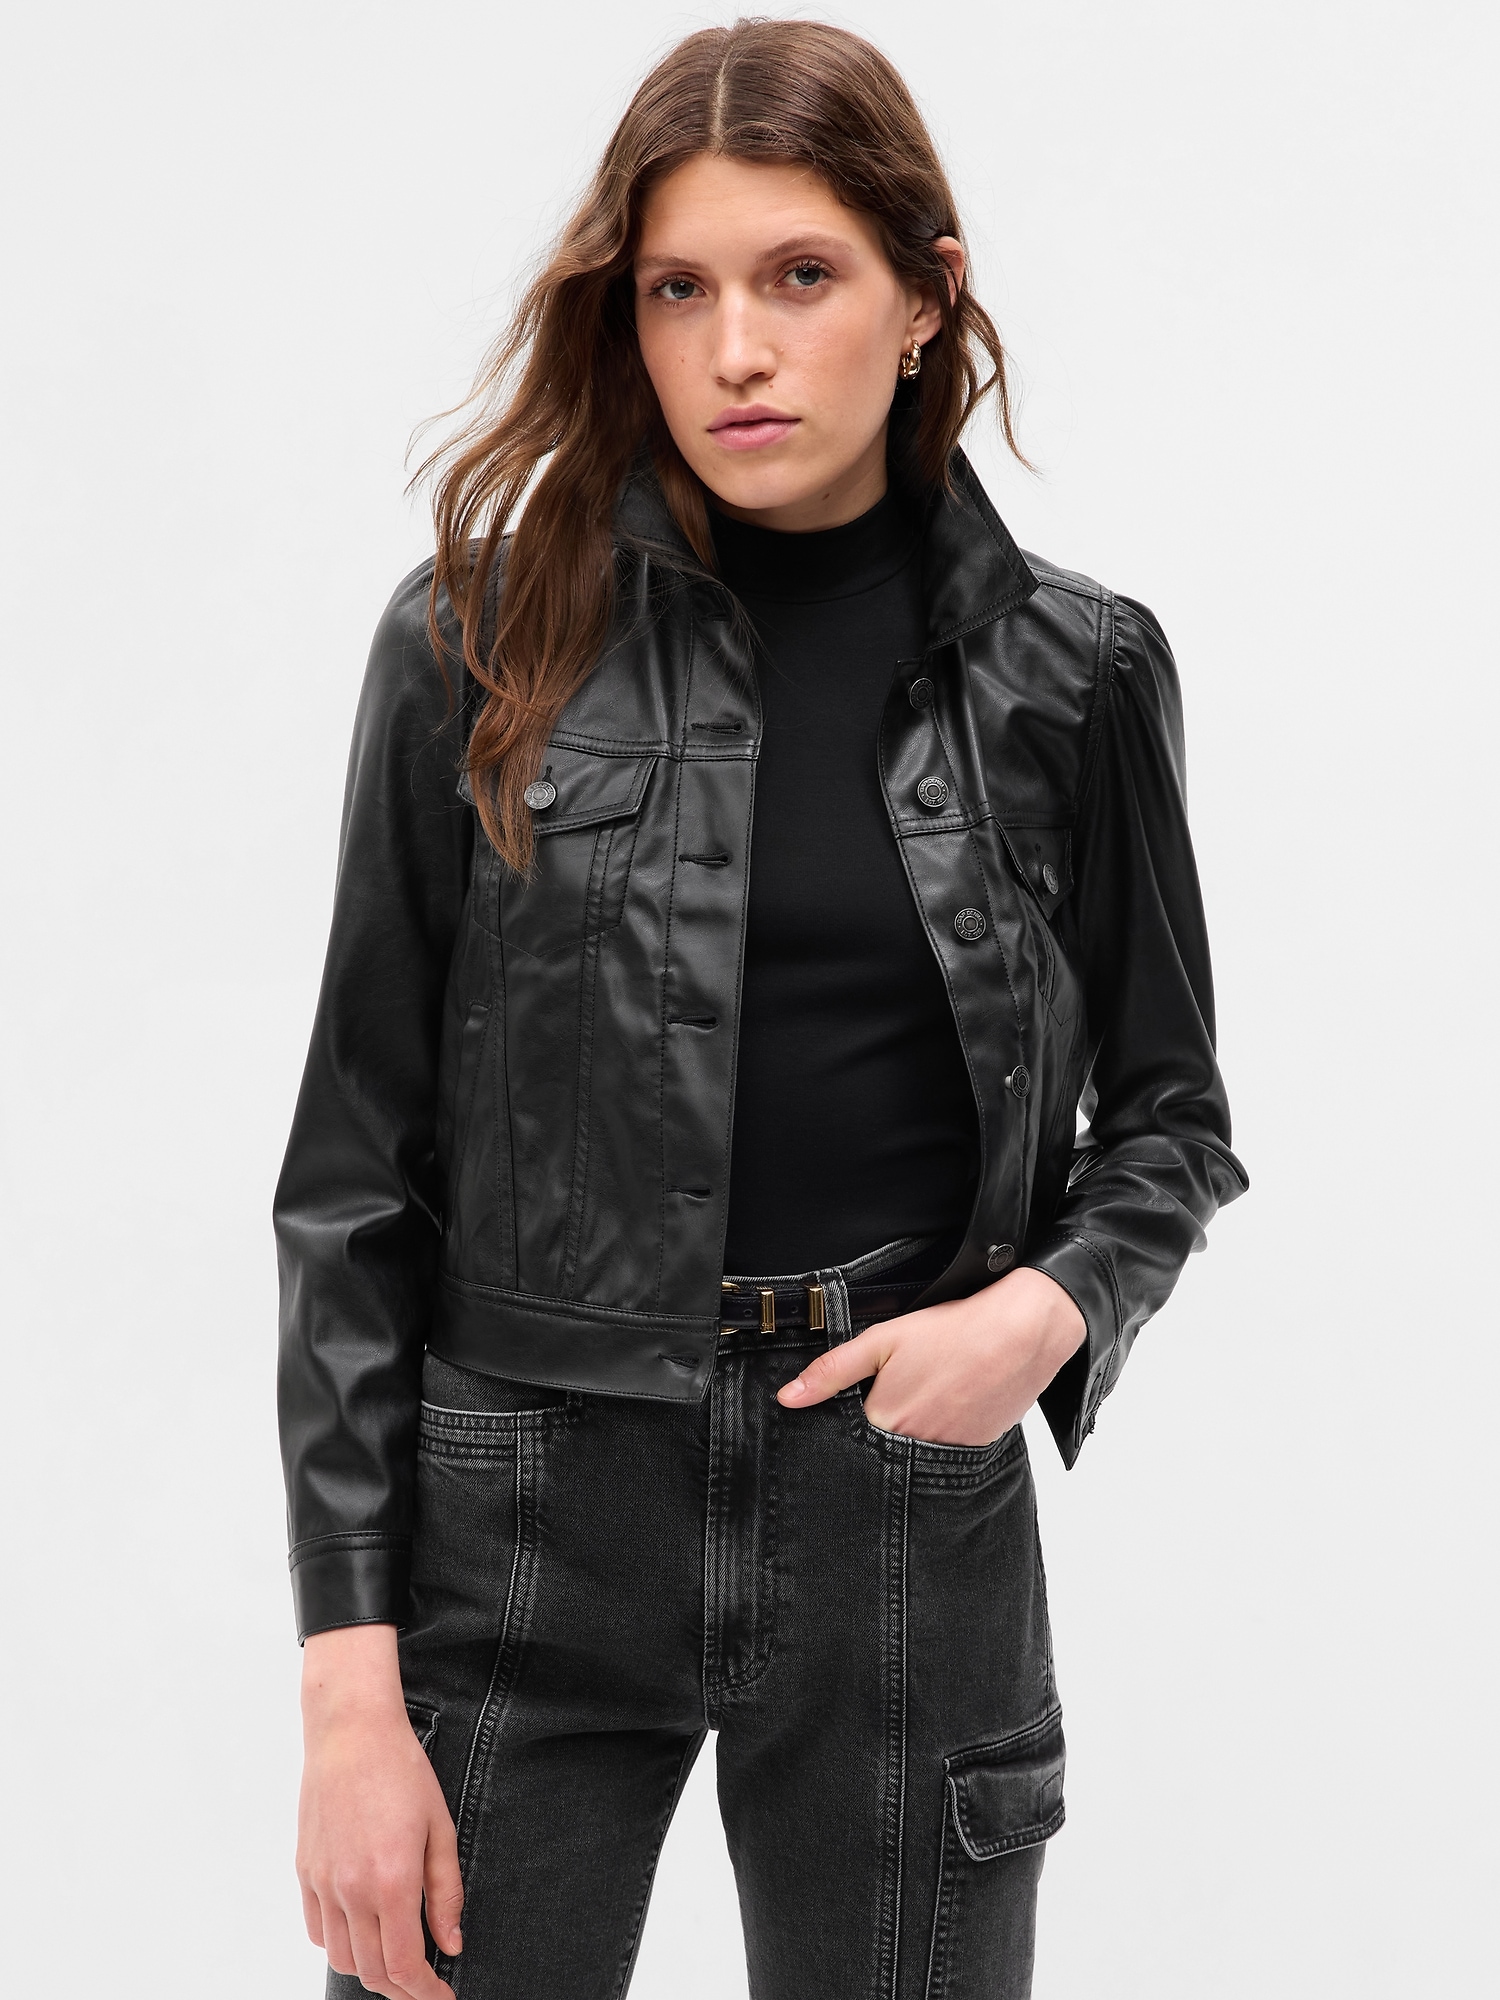 Women's Vegan Leather Moto Jacket by Gap Black Tall Size S